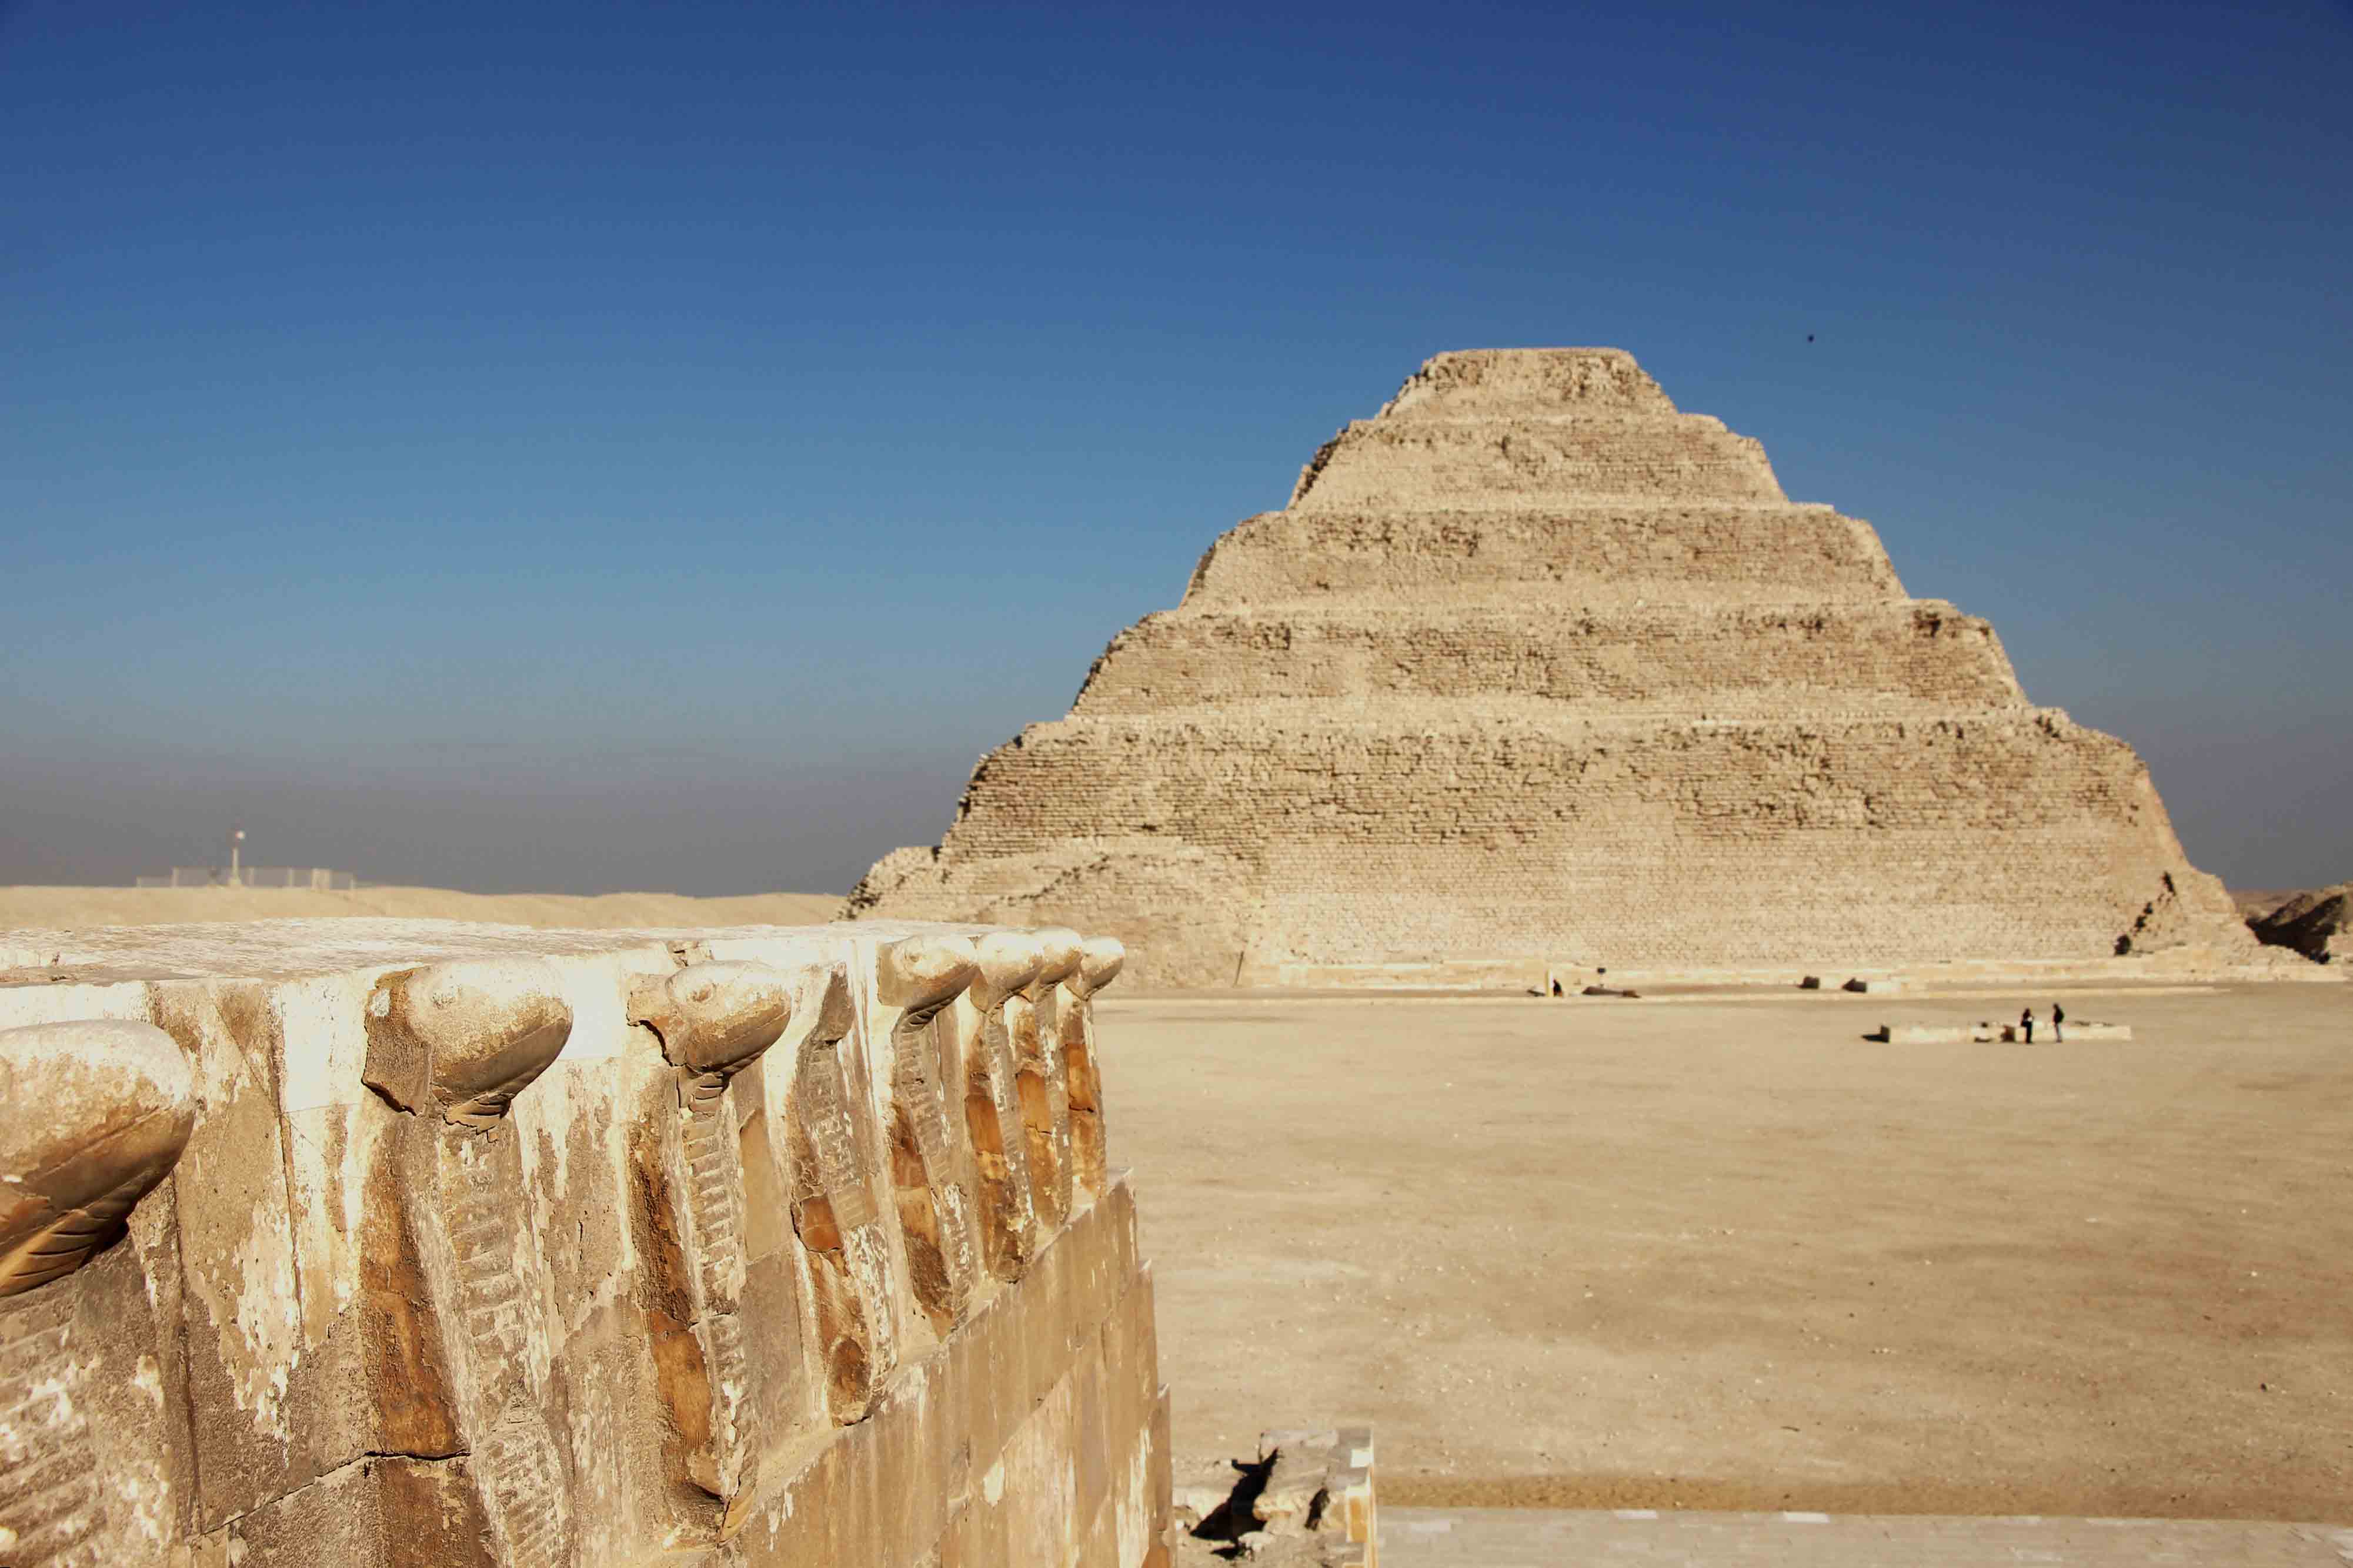 Viewpoint of the Step Pyramid of Djoser, found at Egypt’s Saqqara necropolis